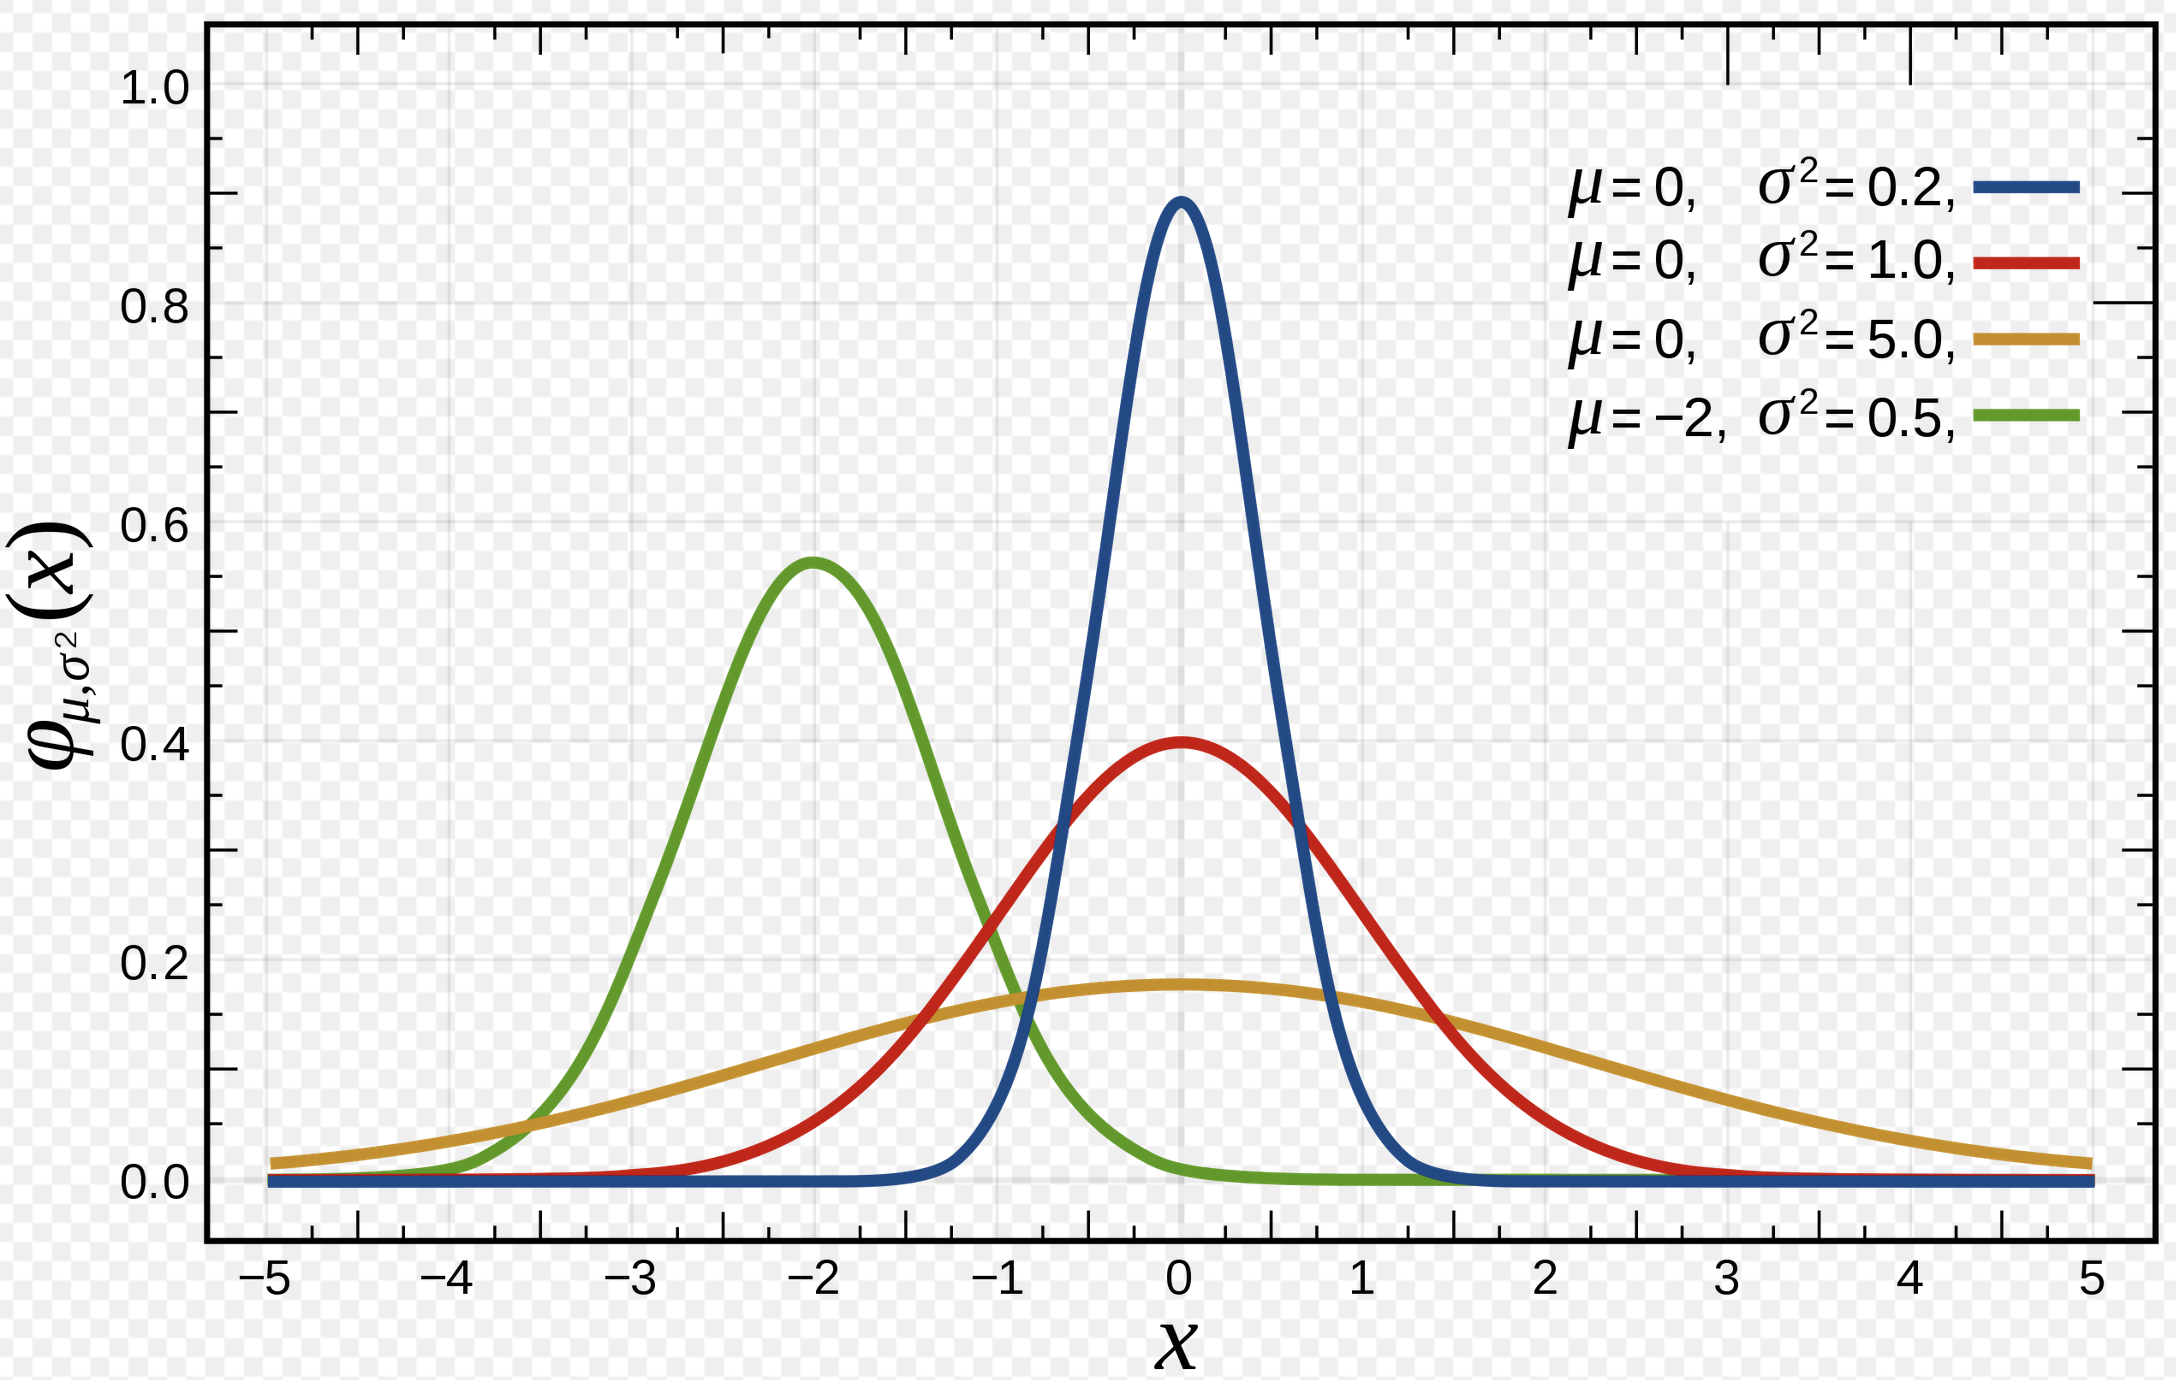 The normal probabilistic distribution